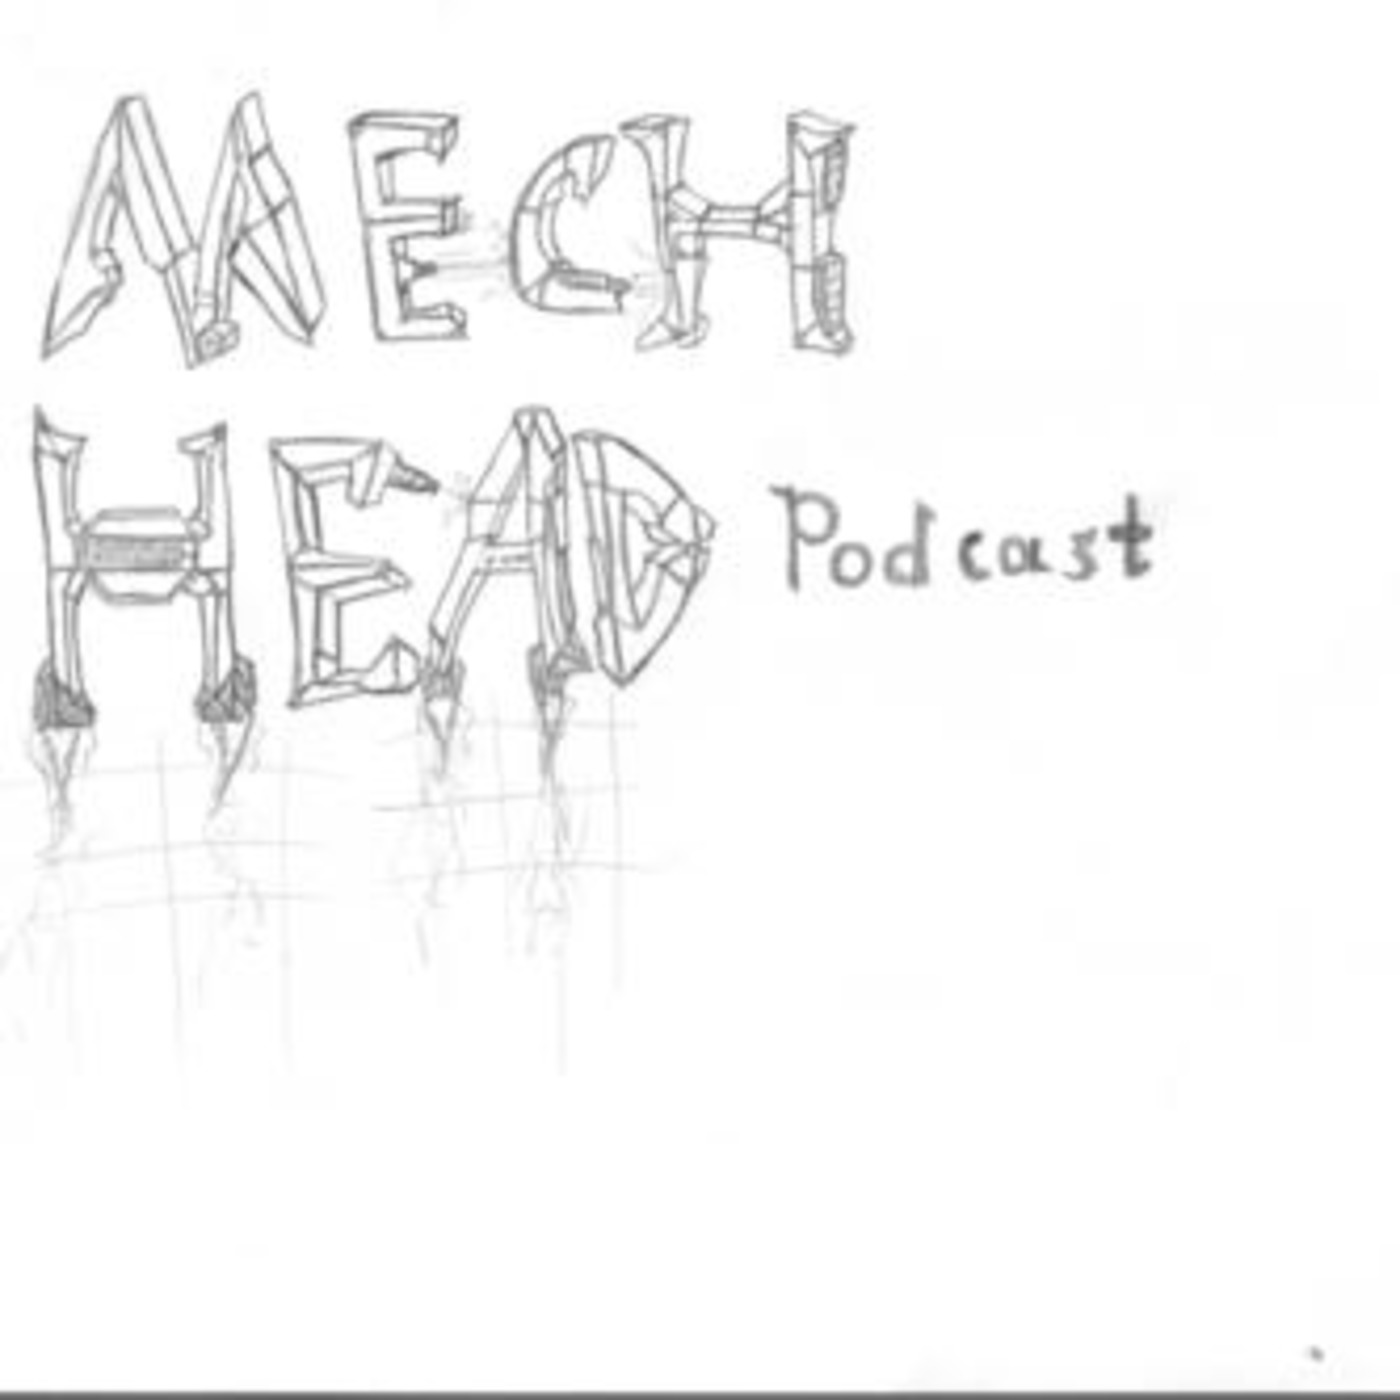 MechHead Podcast #28!